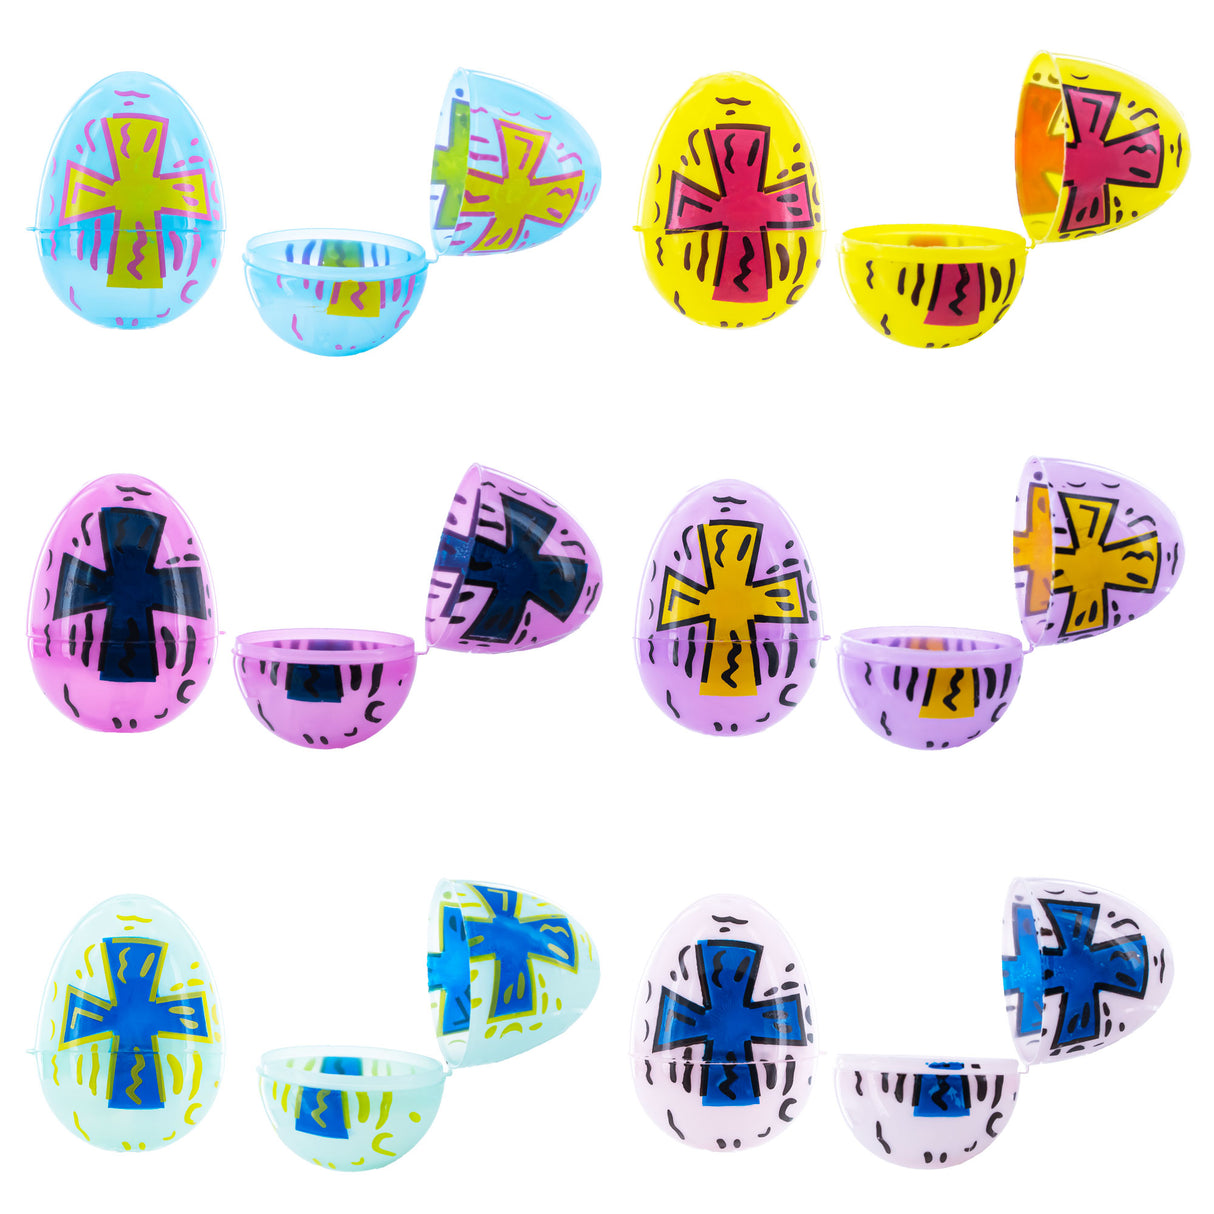 Buy Easter Eggs Plastic Religious by BestPysanky Online Gift Ship